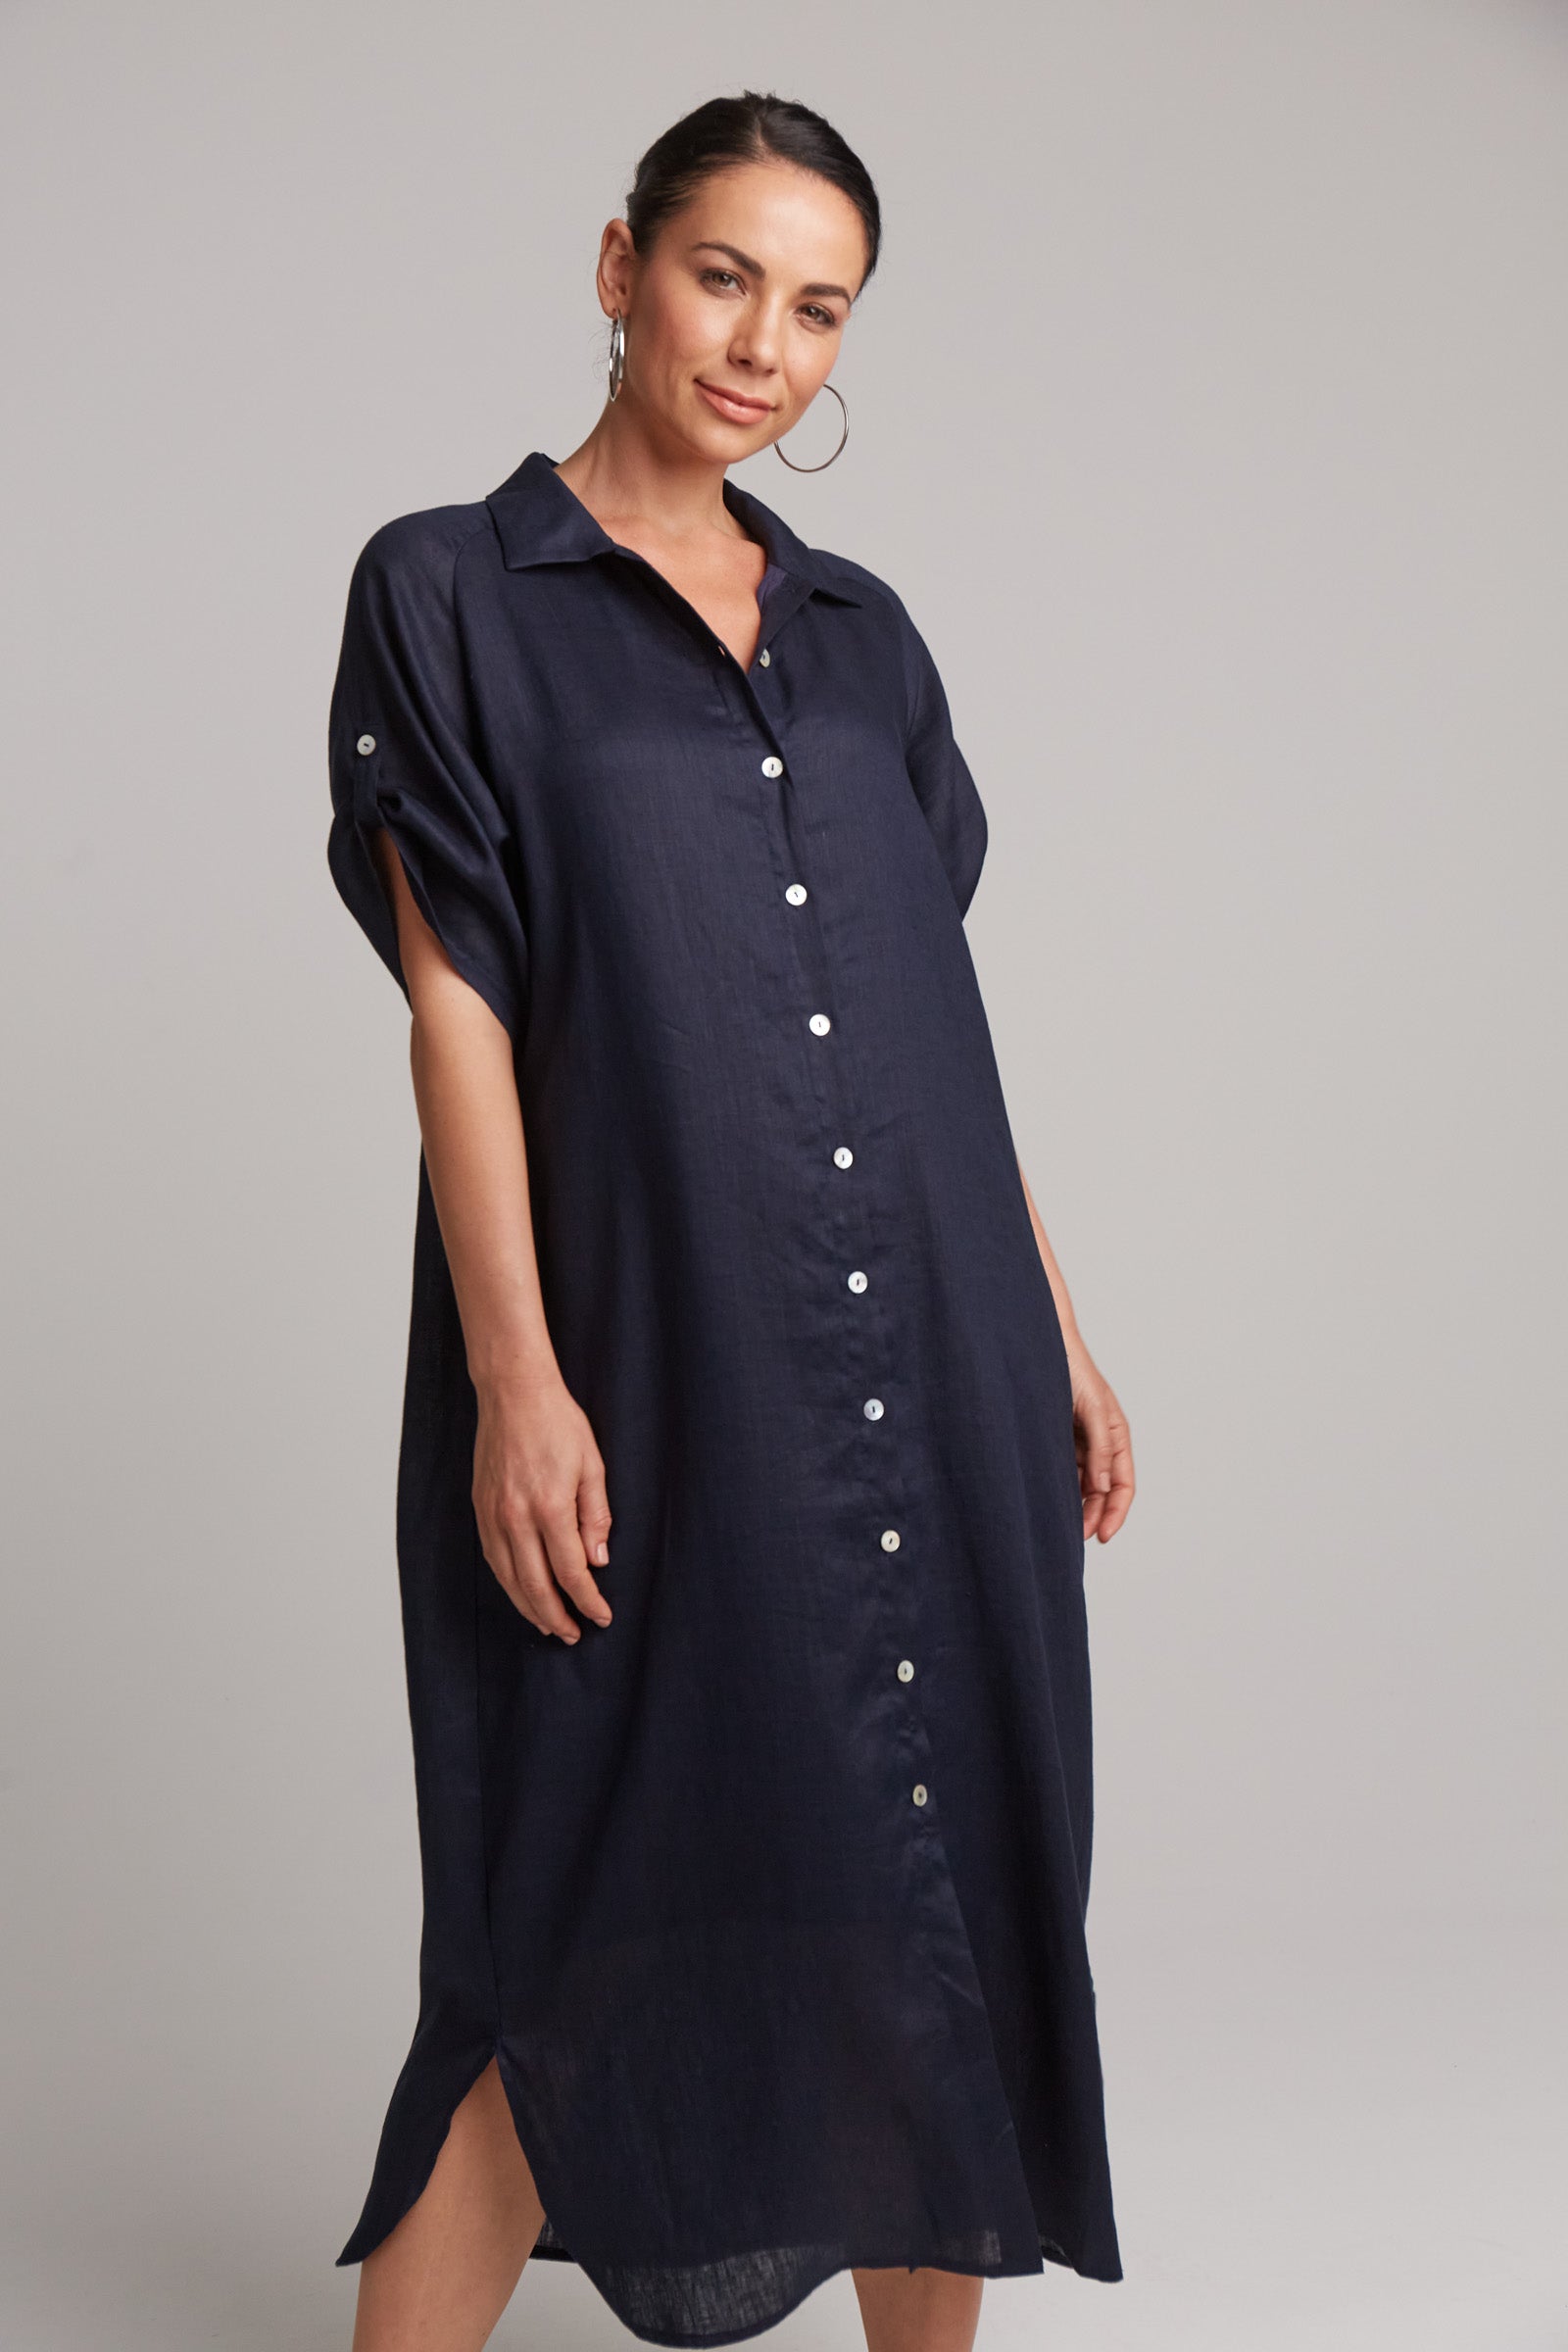 Studio Shirt Dress - Navy - eb&ive Clothing - Shirt Dress Mid Linen